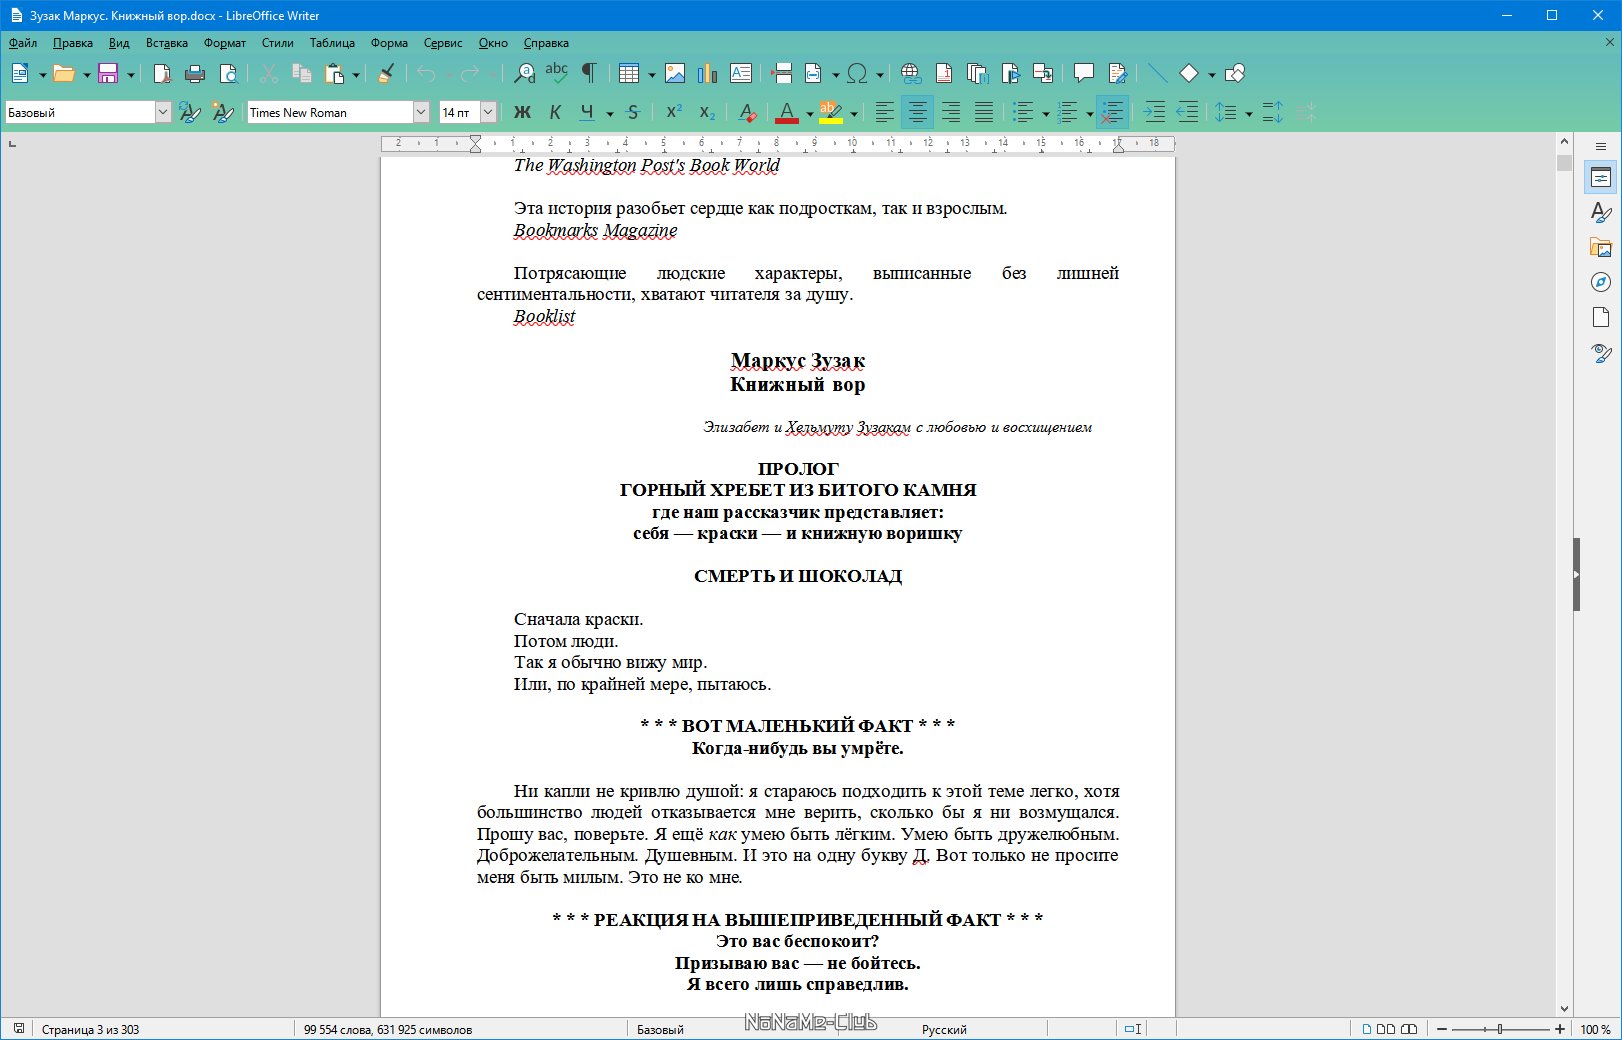 LibreOffice 7.2.4.1 Final [Multi/Ru]